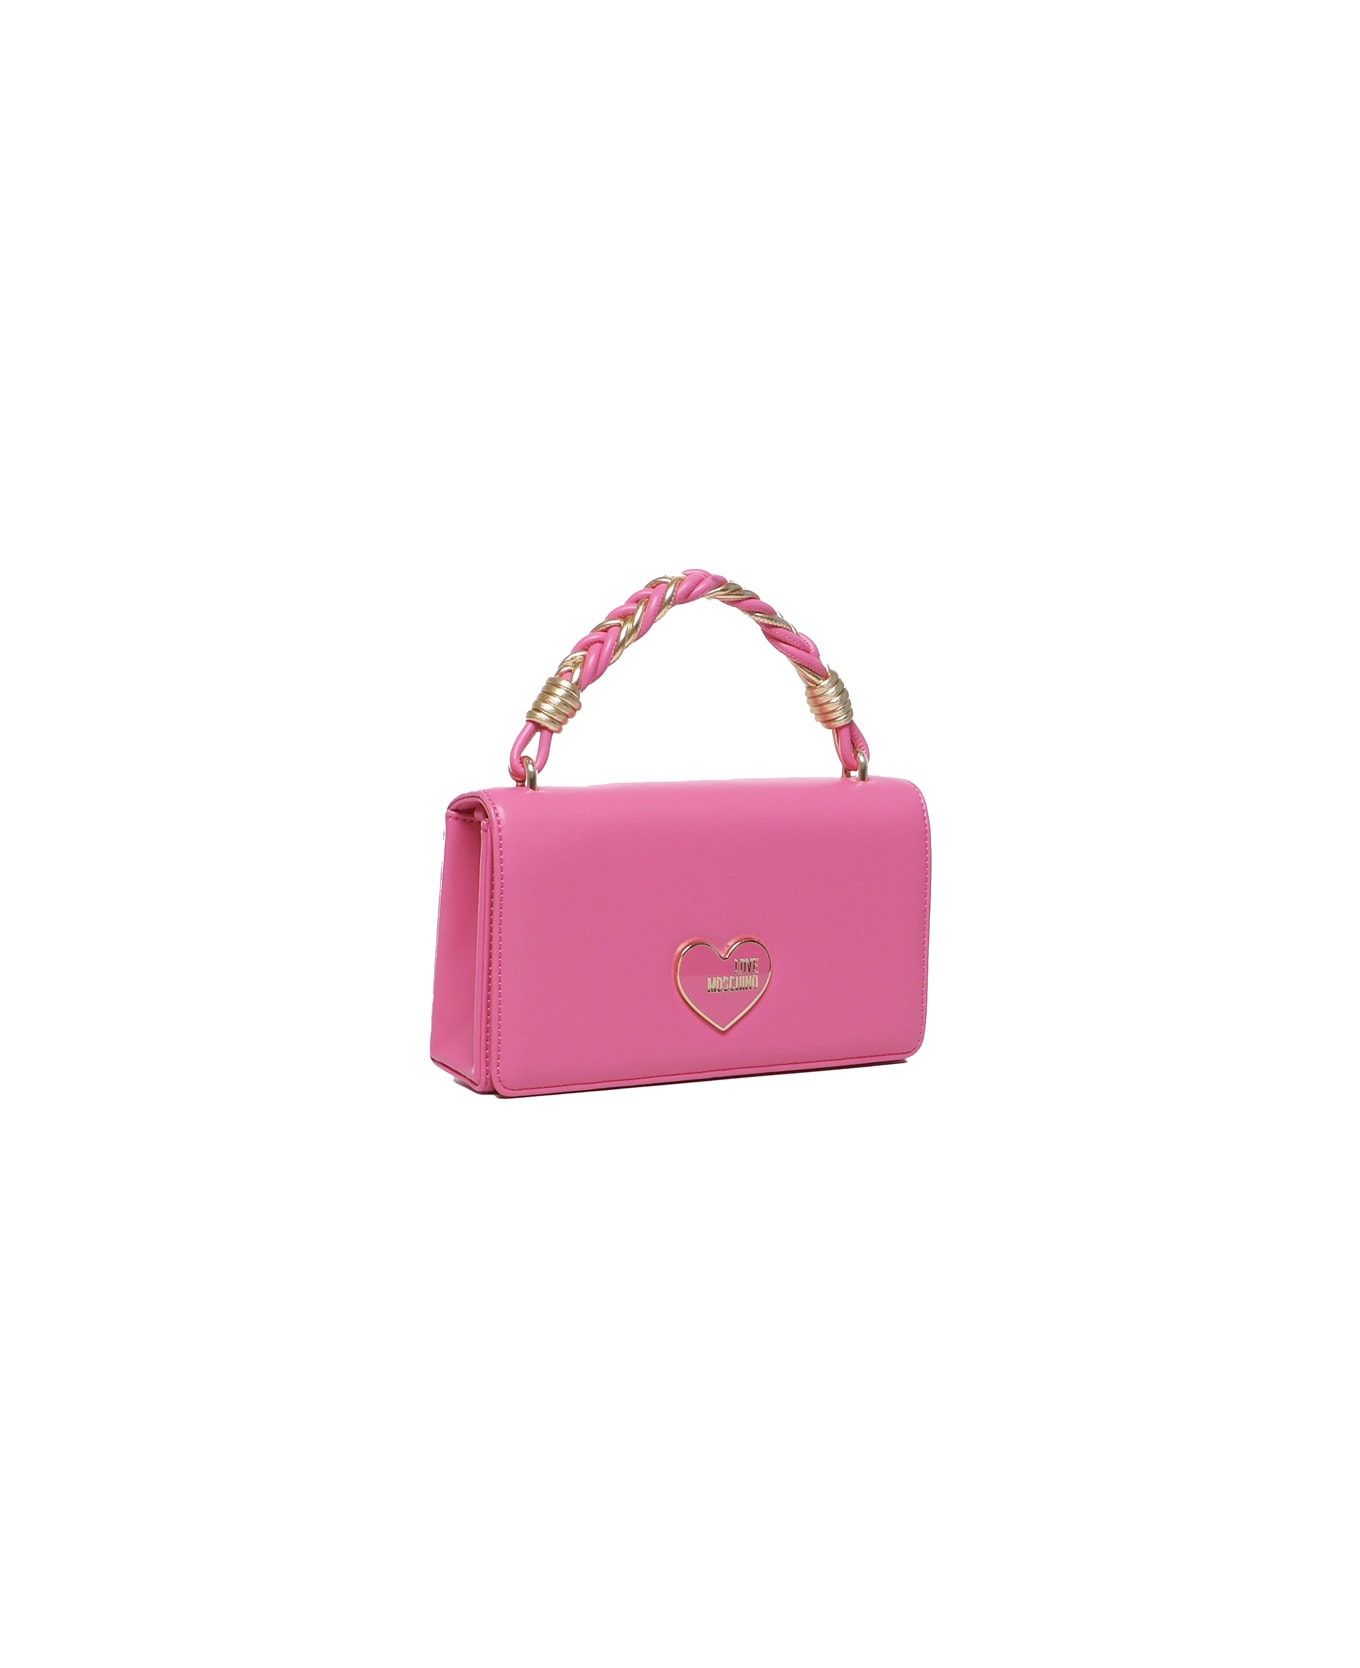 Love Moschino Handheld Handbag With Chain Shoulder Strap - Fuxia トートバッグ